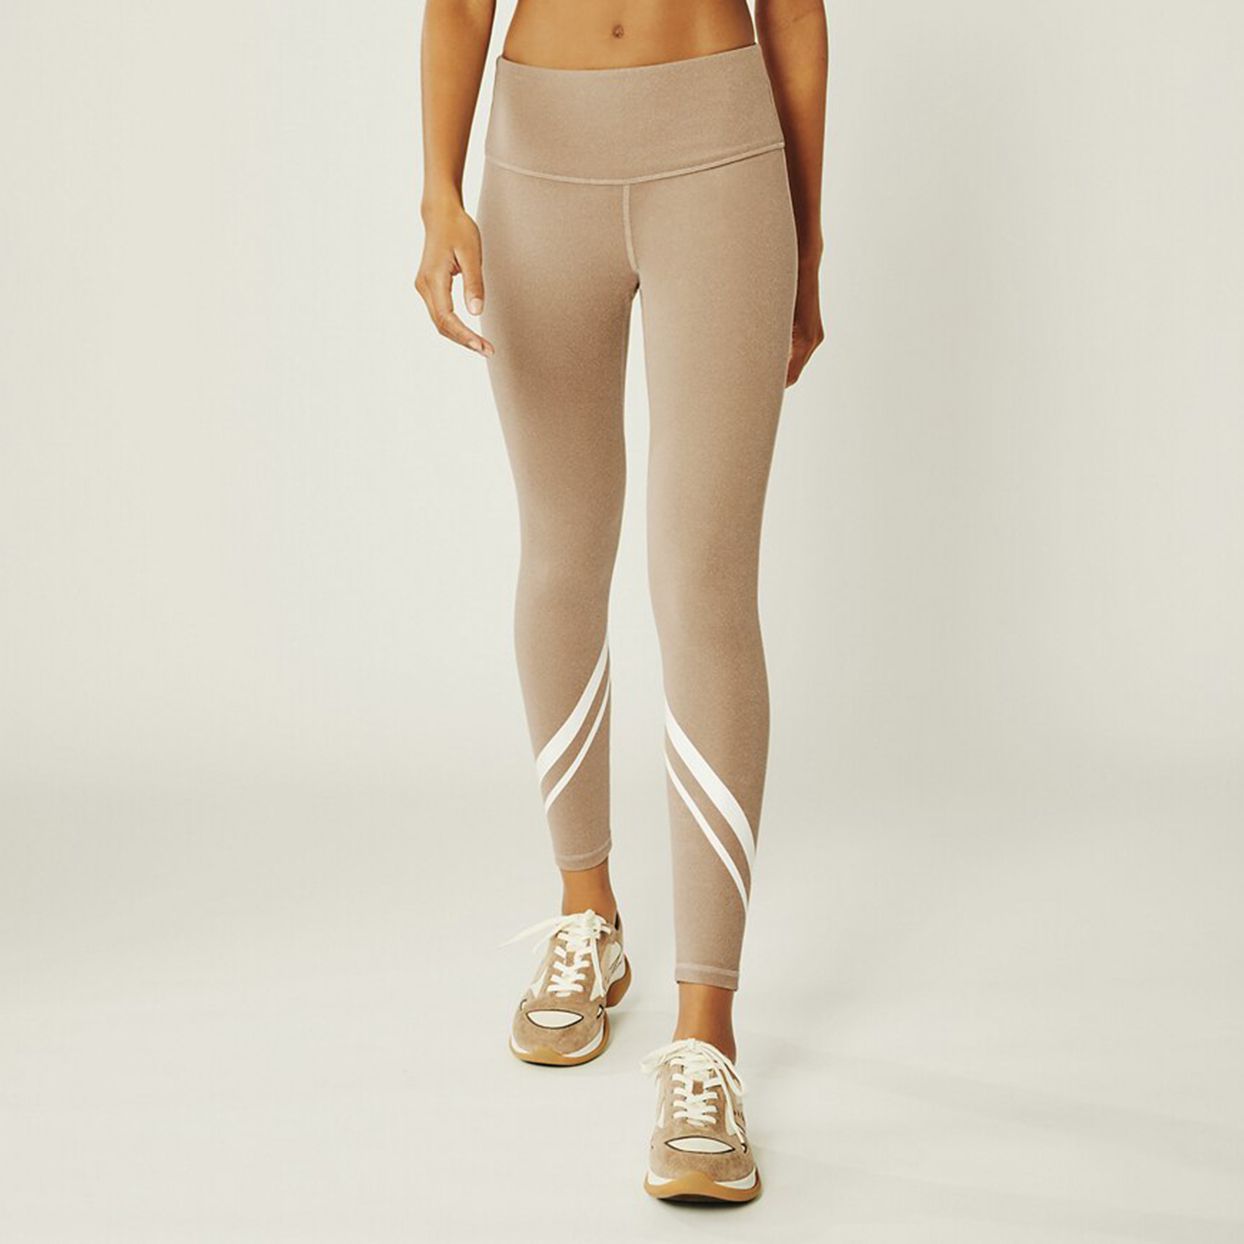 Women Printed Yoga Leggings Pants High Waist Fitness Sports Workout Trousers D89 